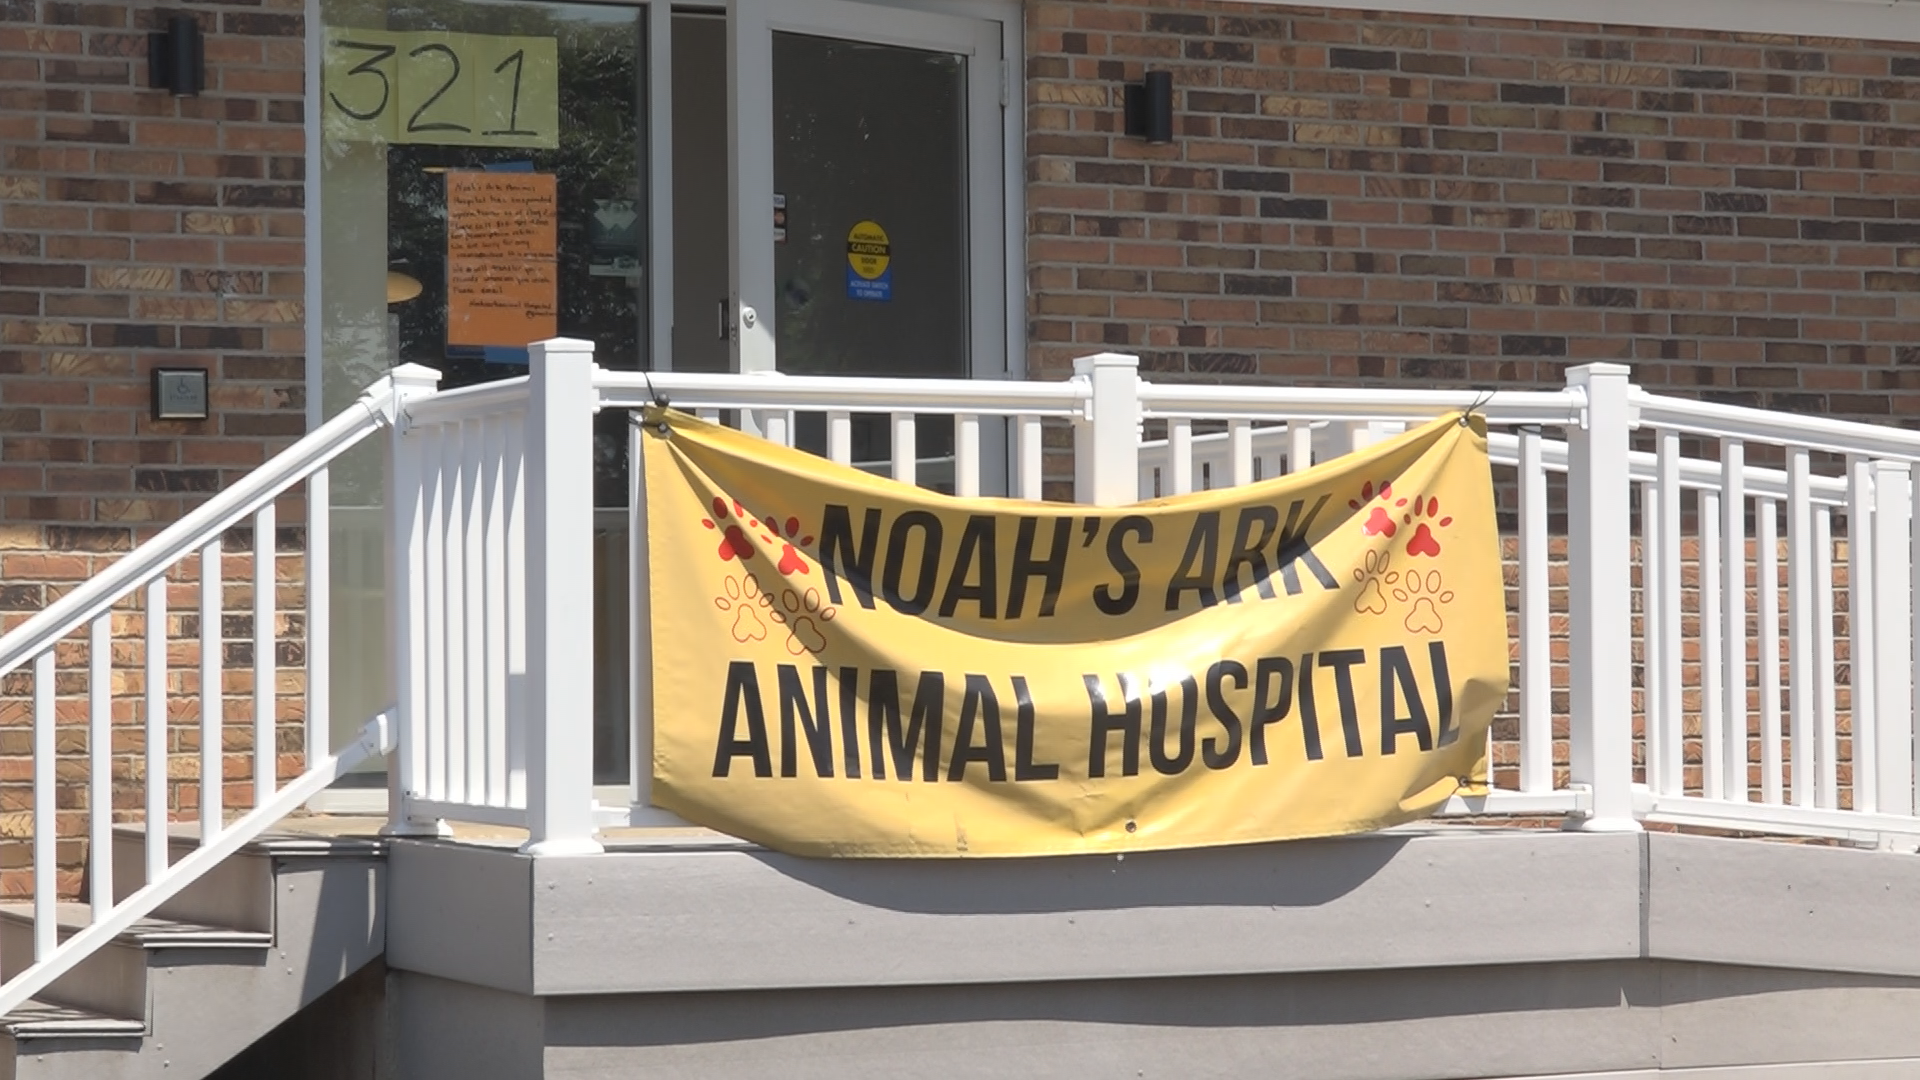 Noah's Ark Animal Hospital closure leaves mixed feelings